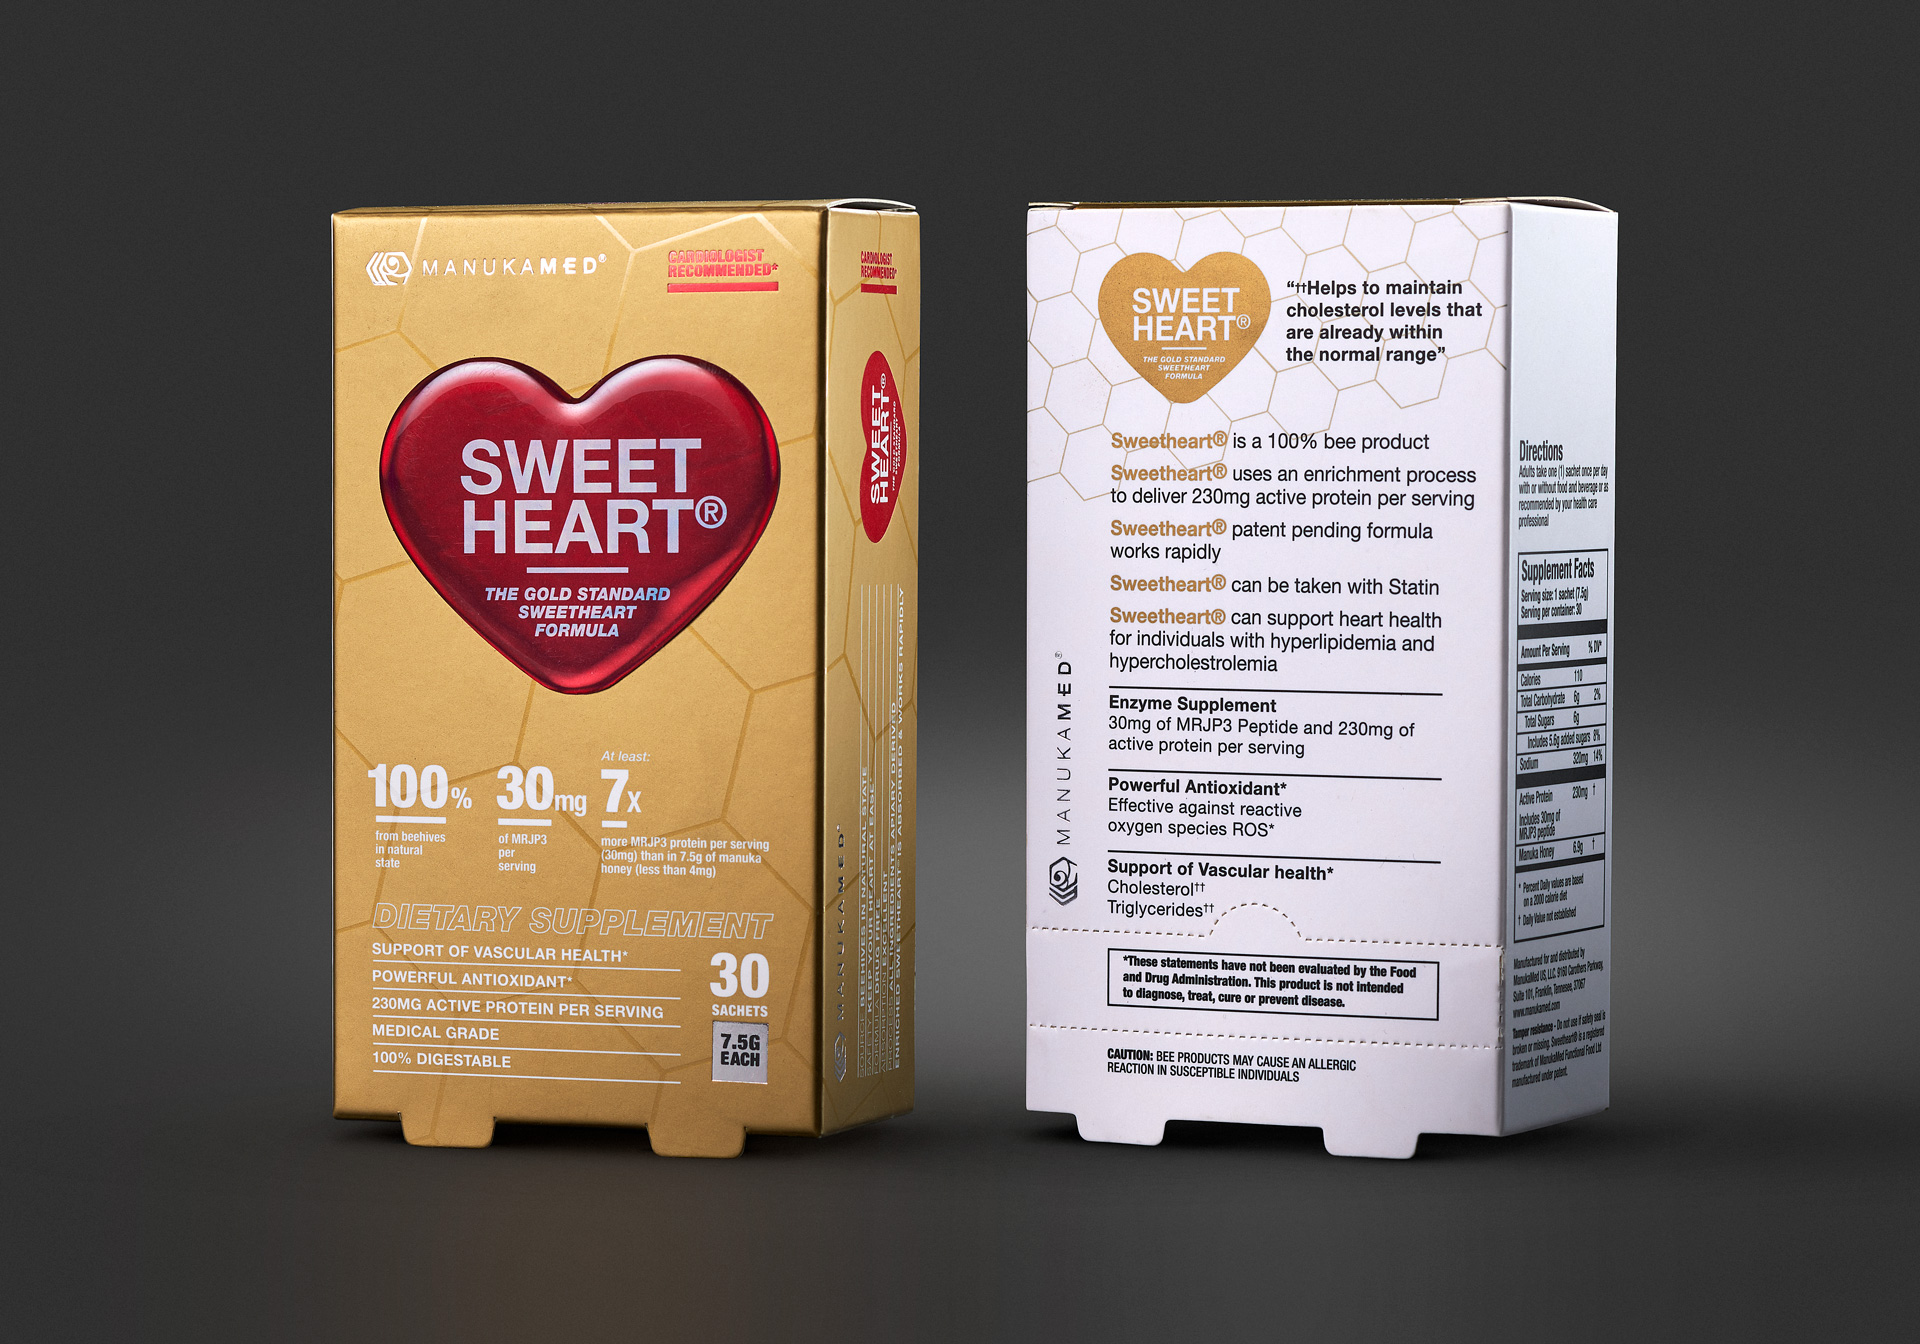 Robertstown-Sweetheart-Cholesterol-Lowering-Manuka-Honey-FB-1